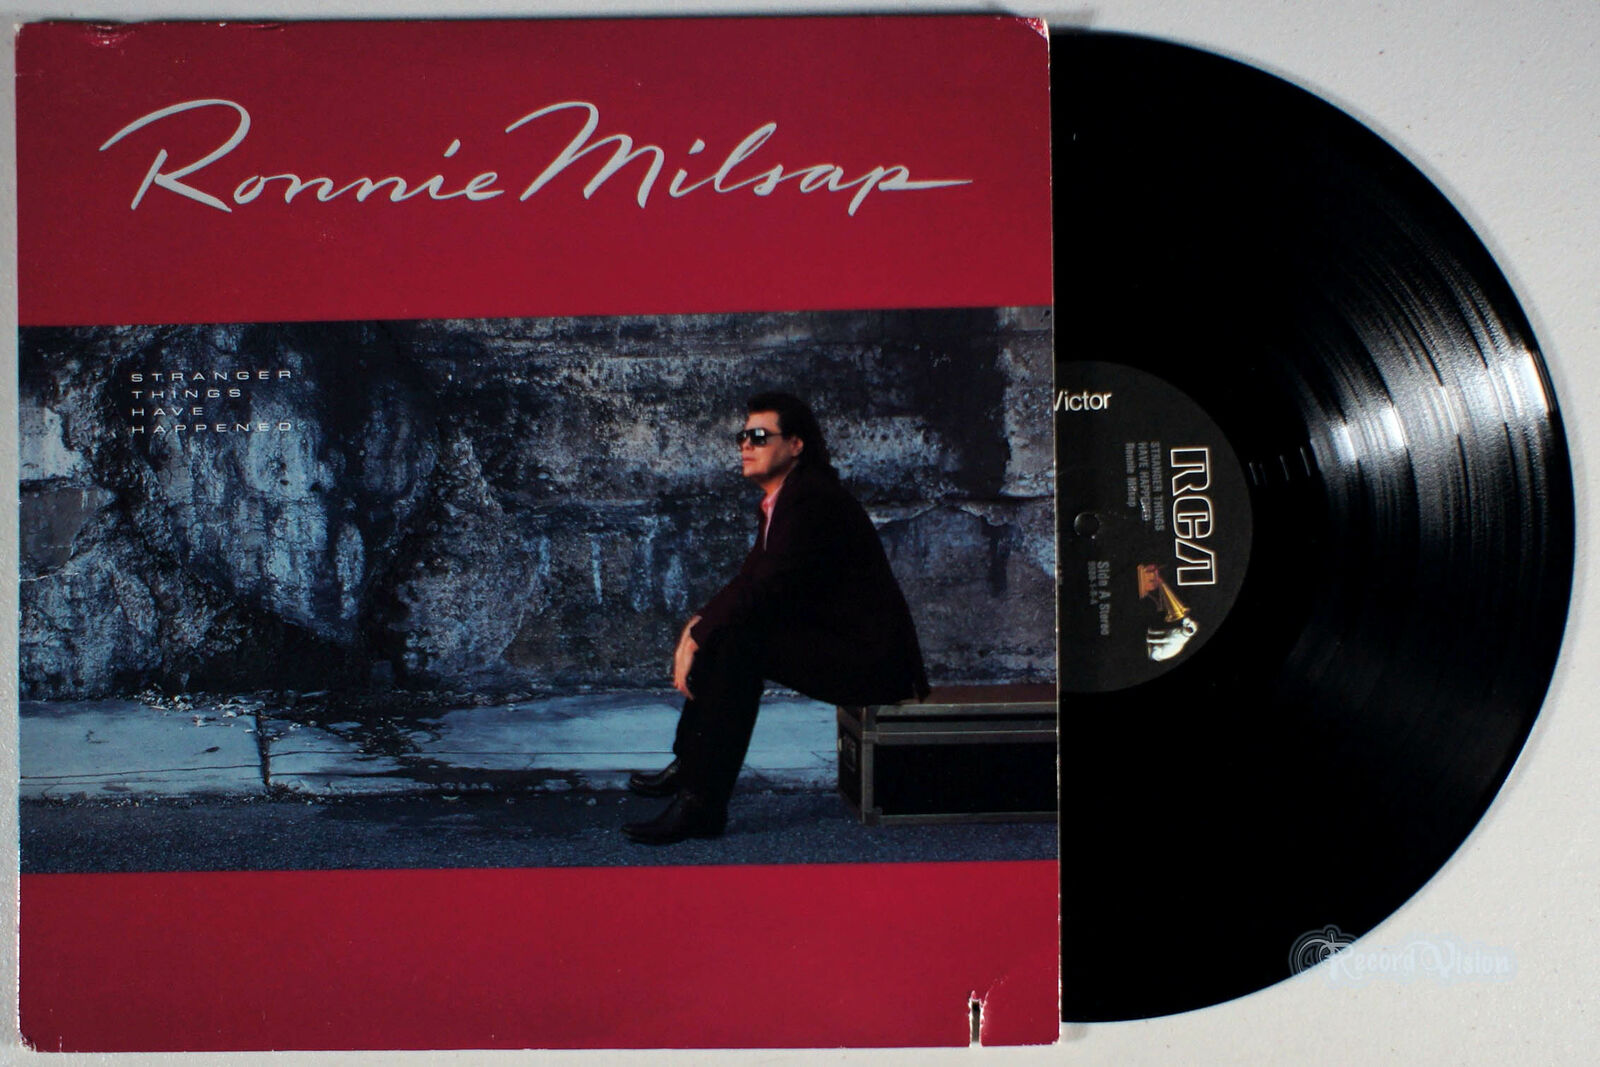 Ronnie Milsap - Stranger Have Things Happened (1989) Vinyl LP • Houston Solution